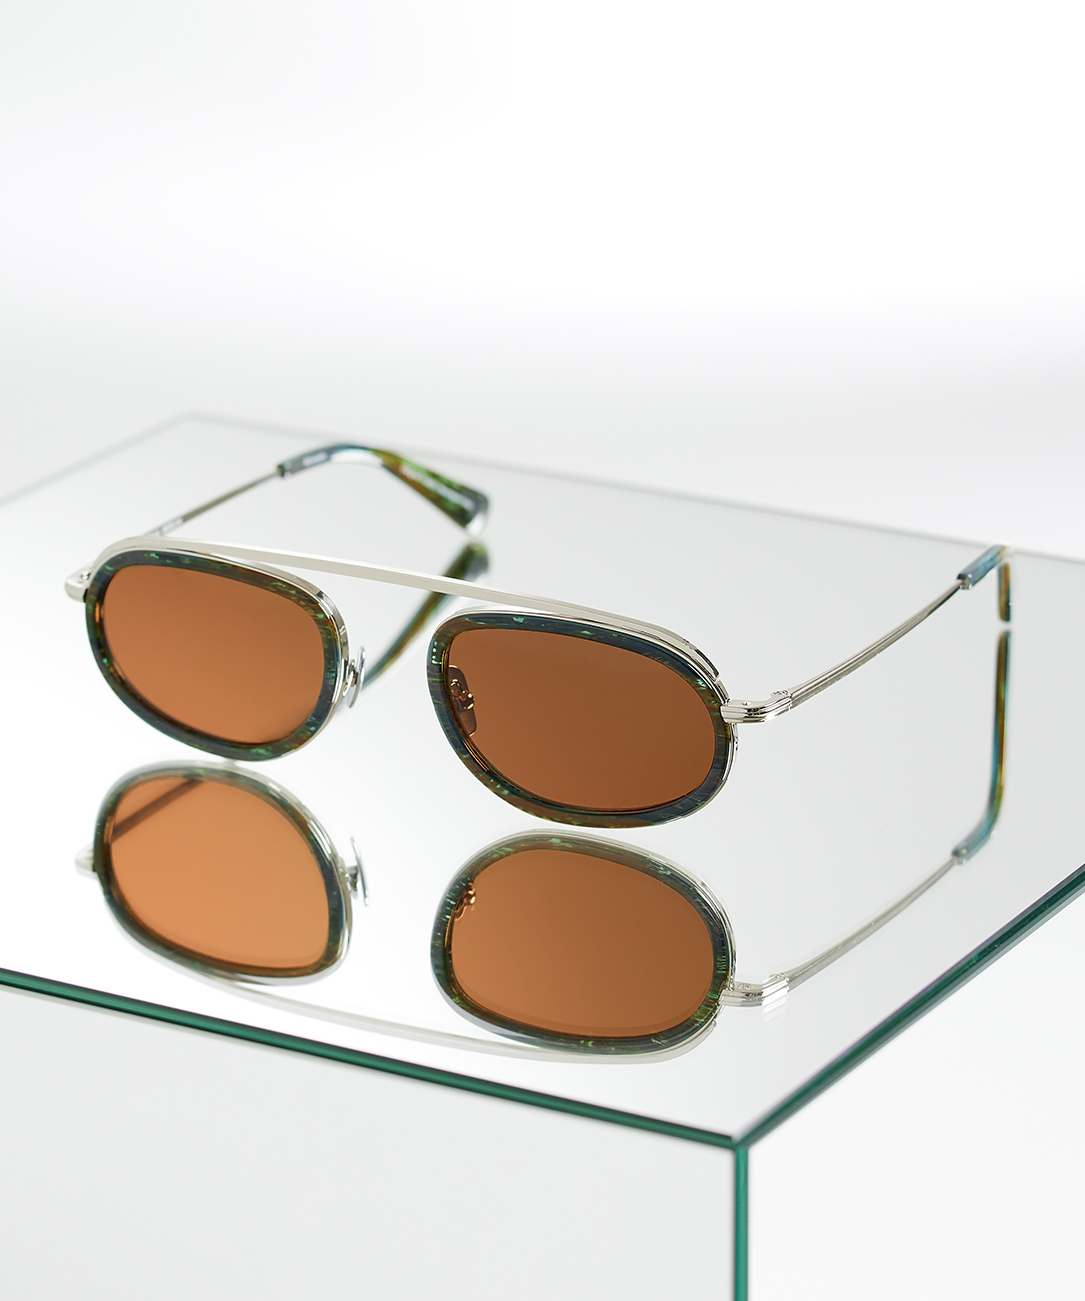 | Sonnenbrillen Sonnenbrille Sonnenbrillen | Complextro Designs Lilienthal Berlin Alle Lagoon Brown Preisgekrönte - | Silver